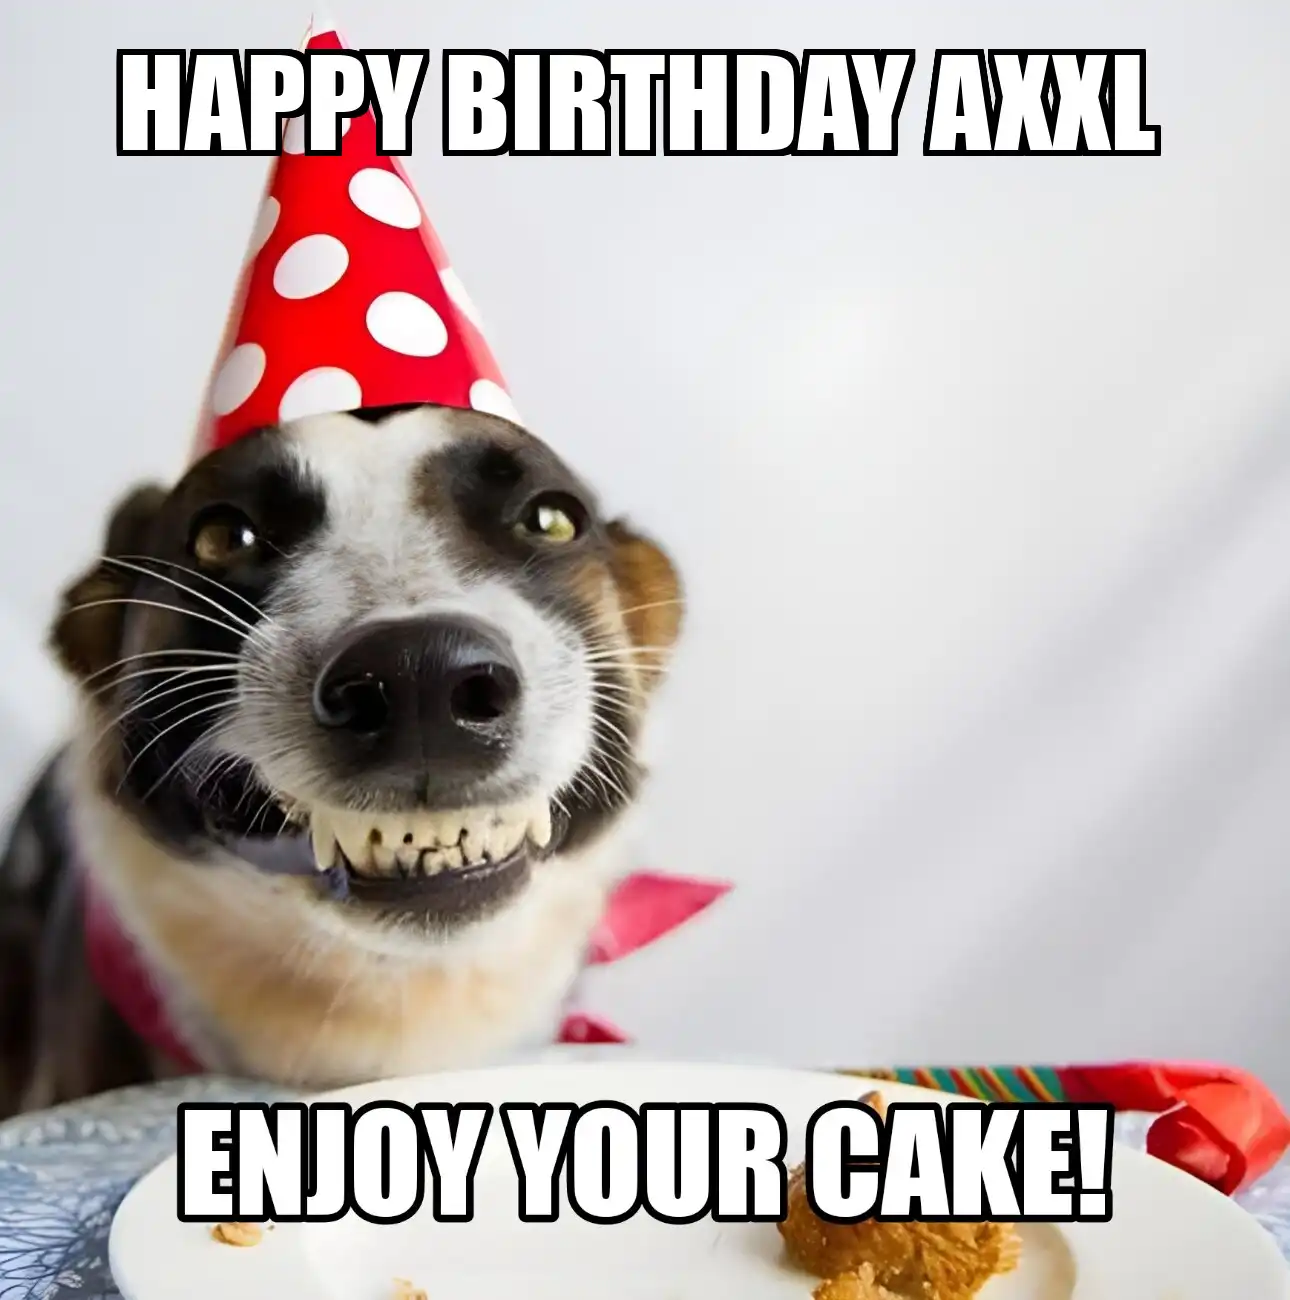 Happy Birthday Axxl Enjoy Your Cake Dog Meme